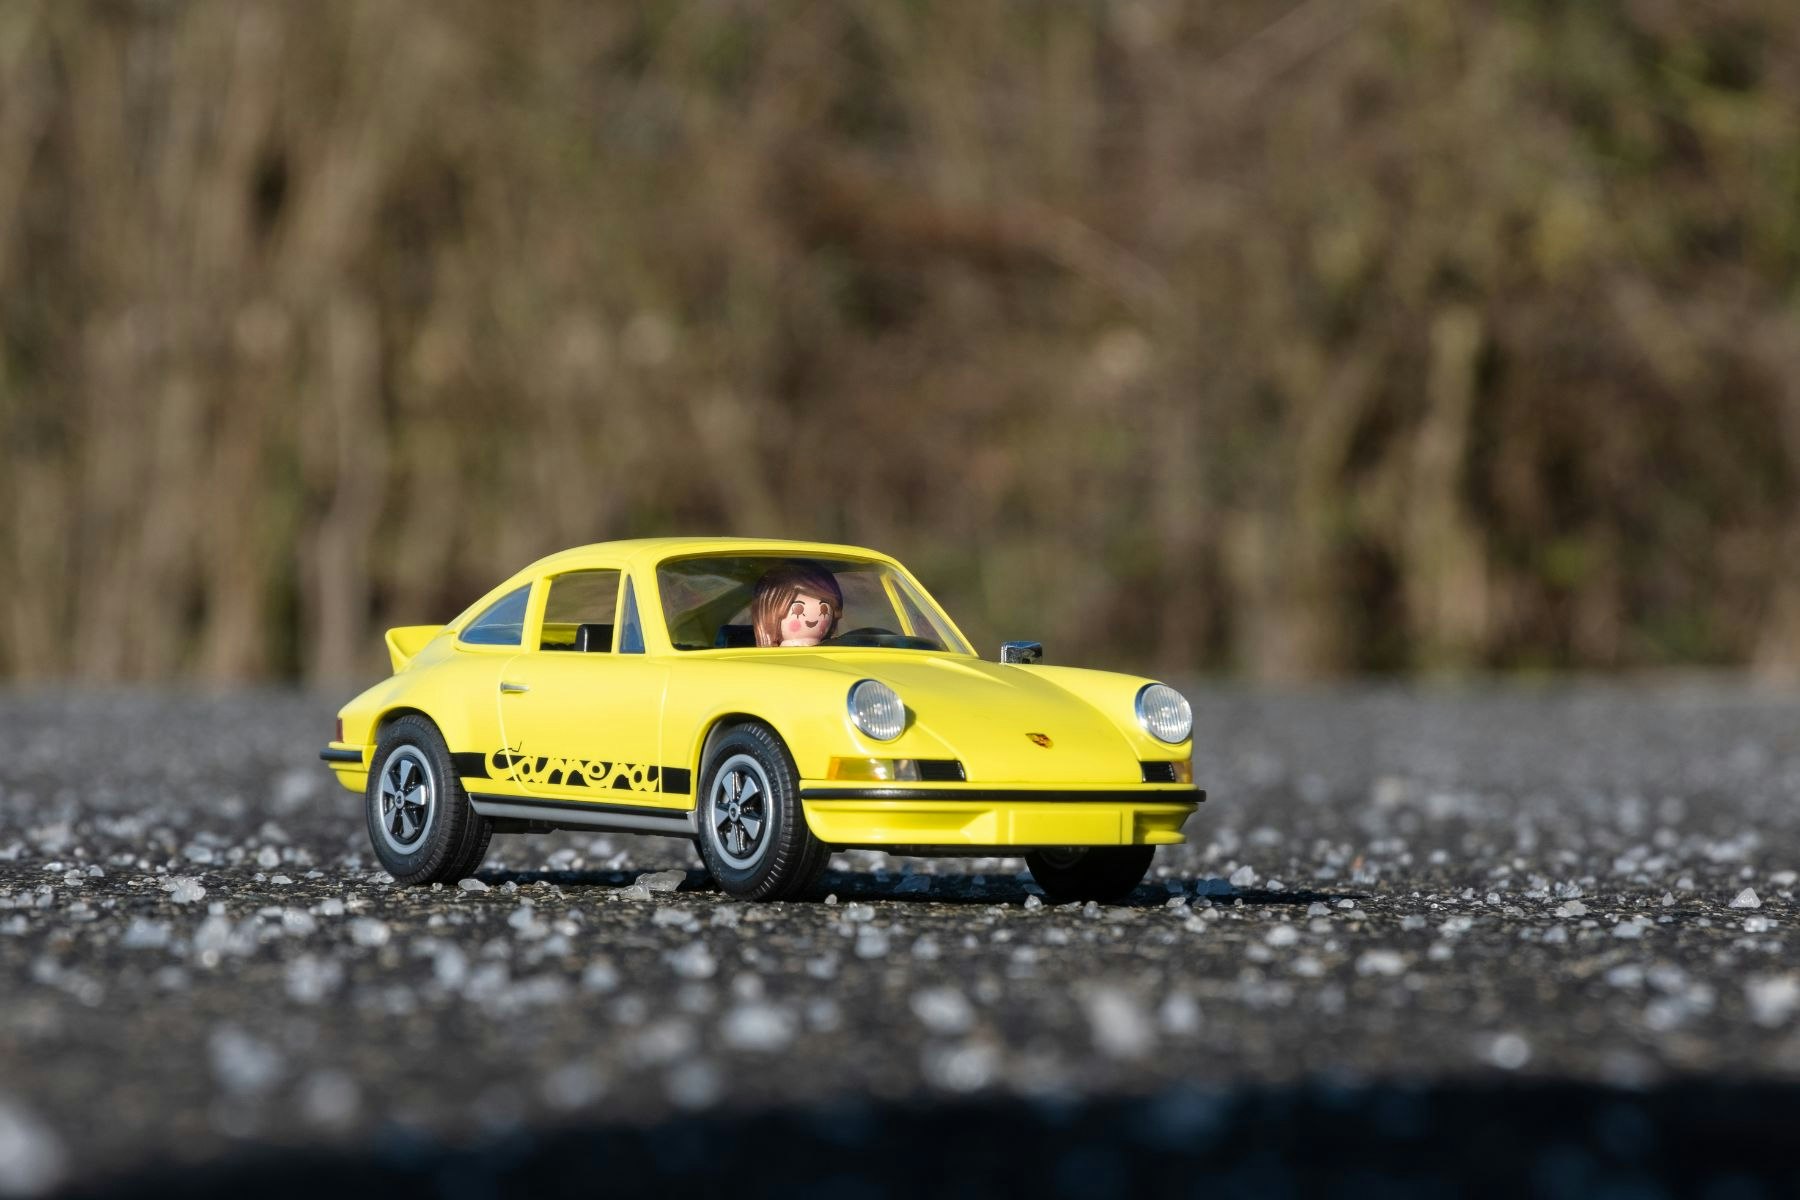 Playmobil Porsche 911 Carrera S Review, Car News